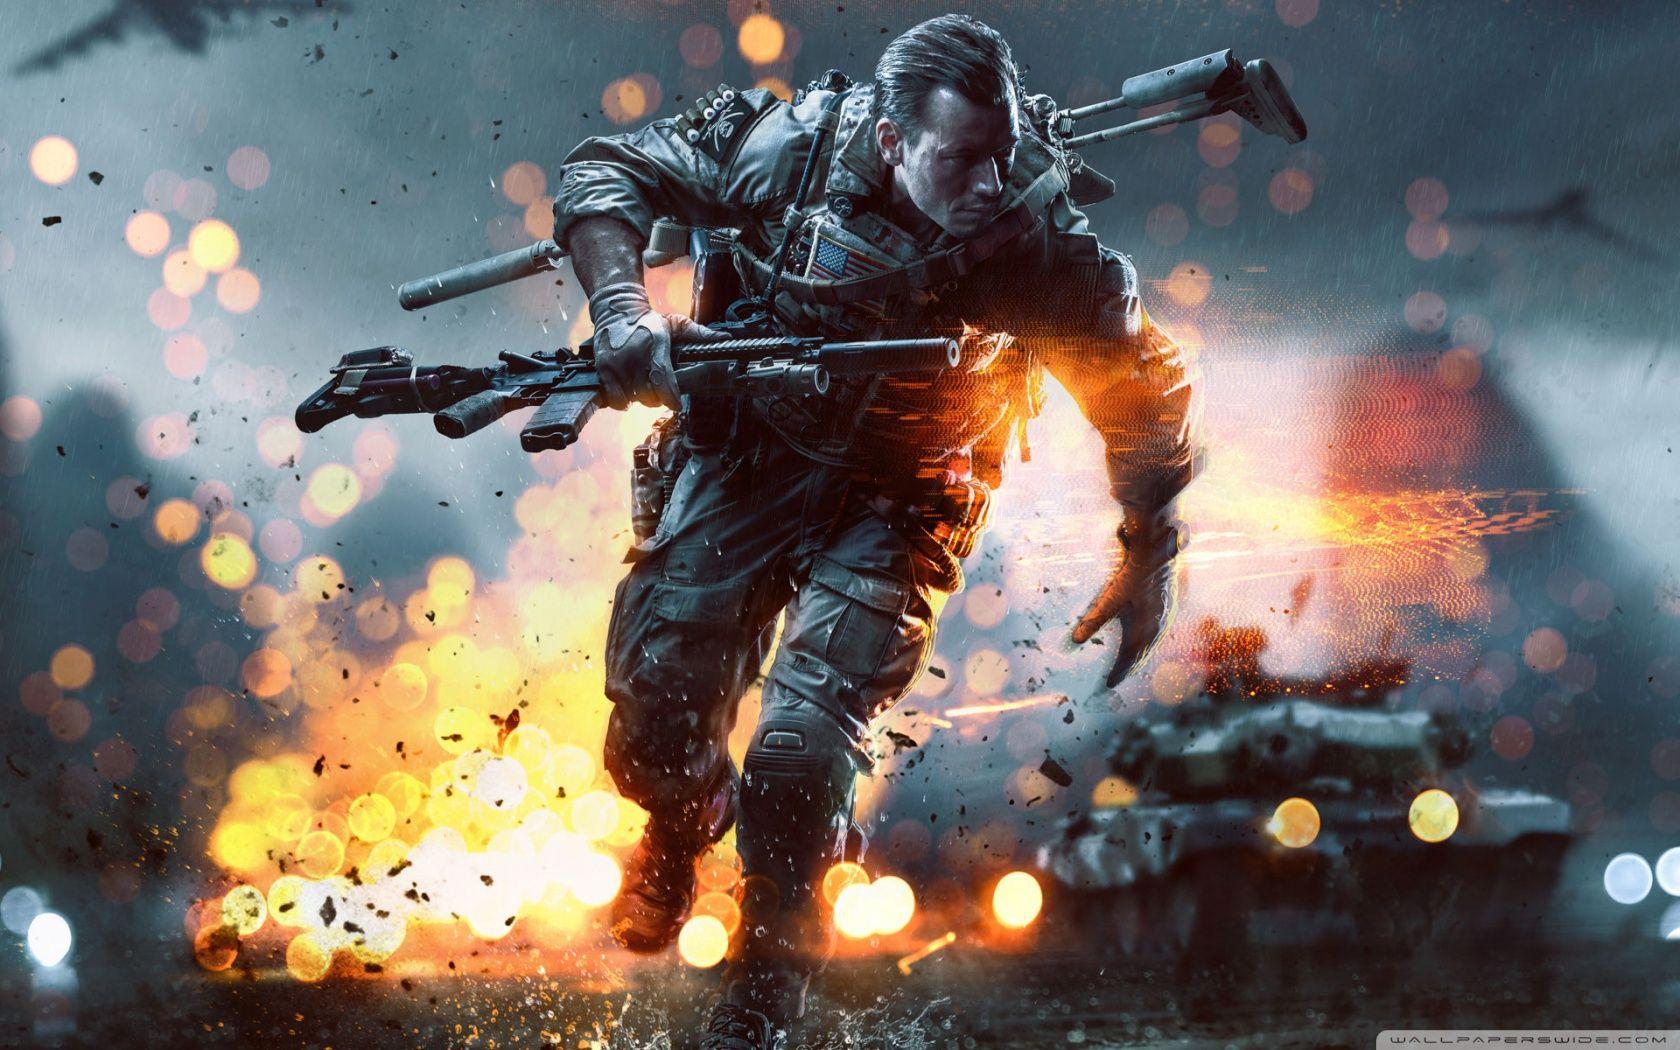 Top 999+ Battlefield 1 Hd Wallpaper Full HD, 4K✓Free to Use